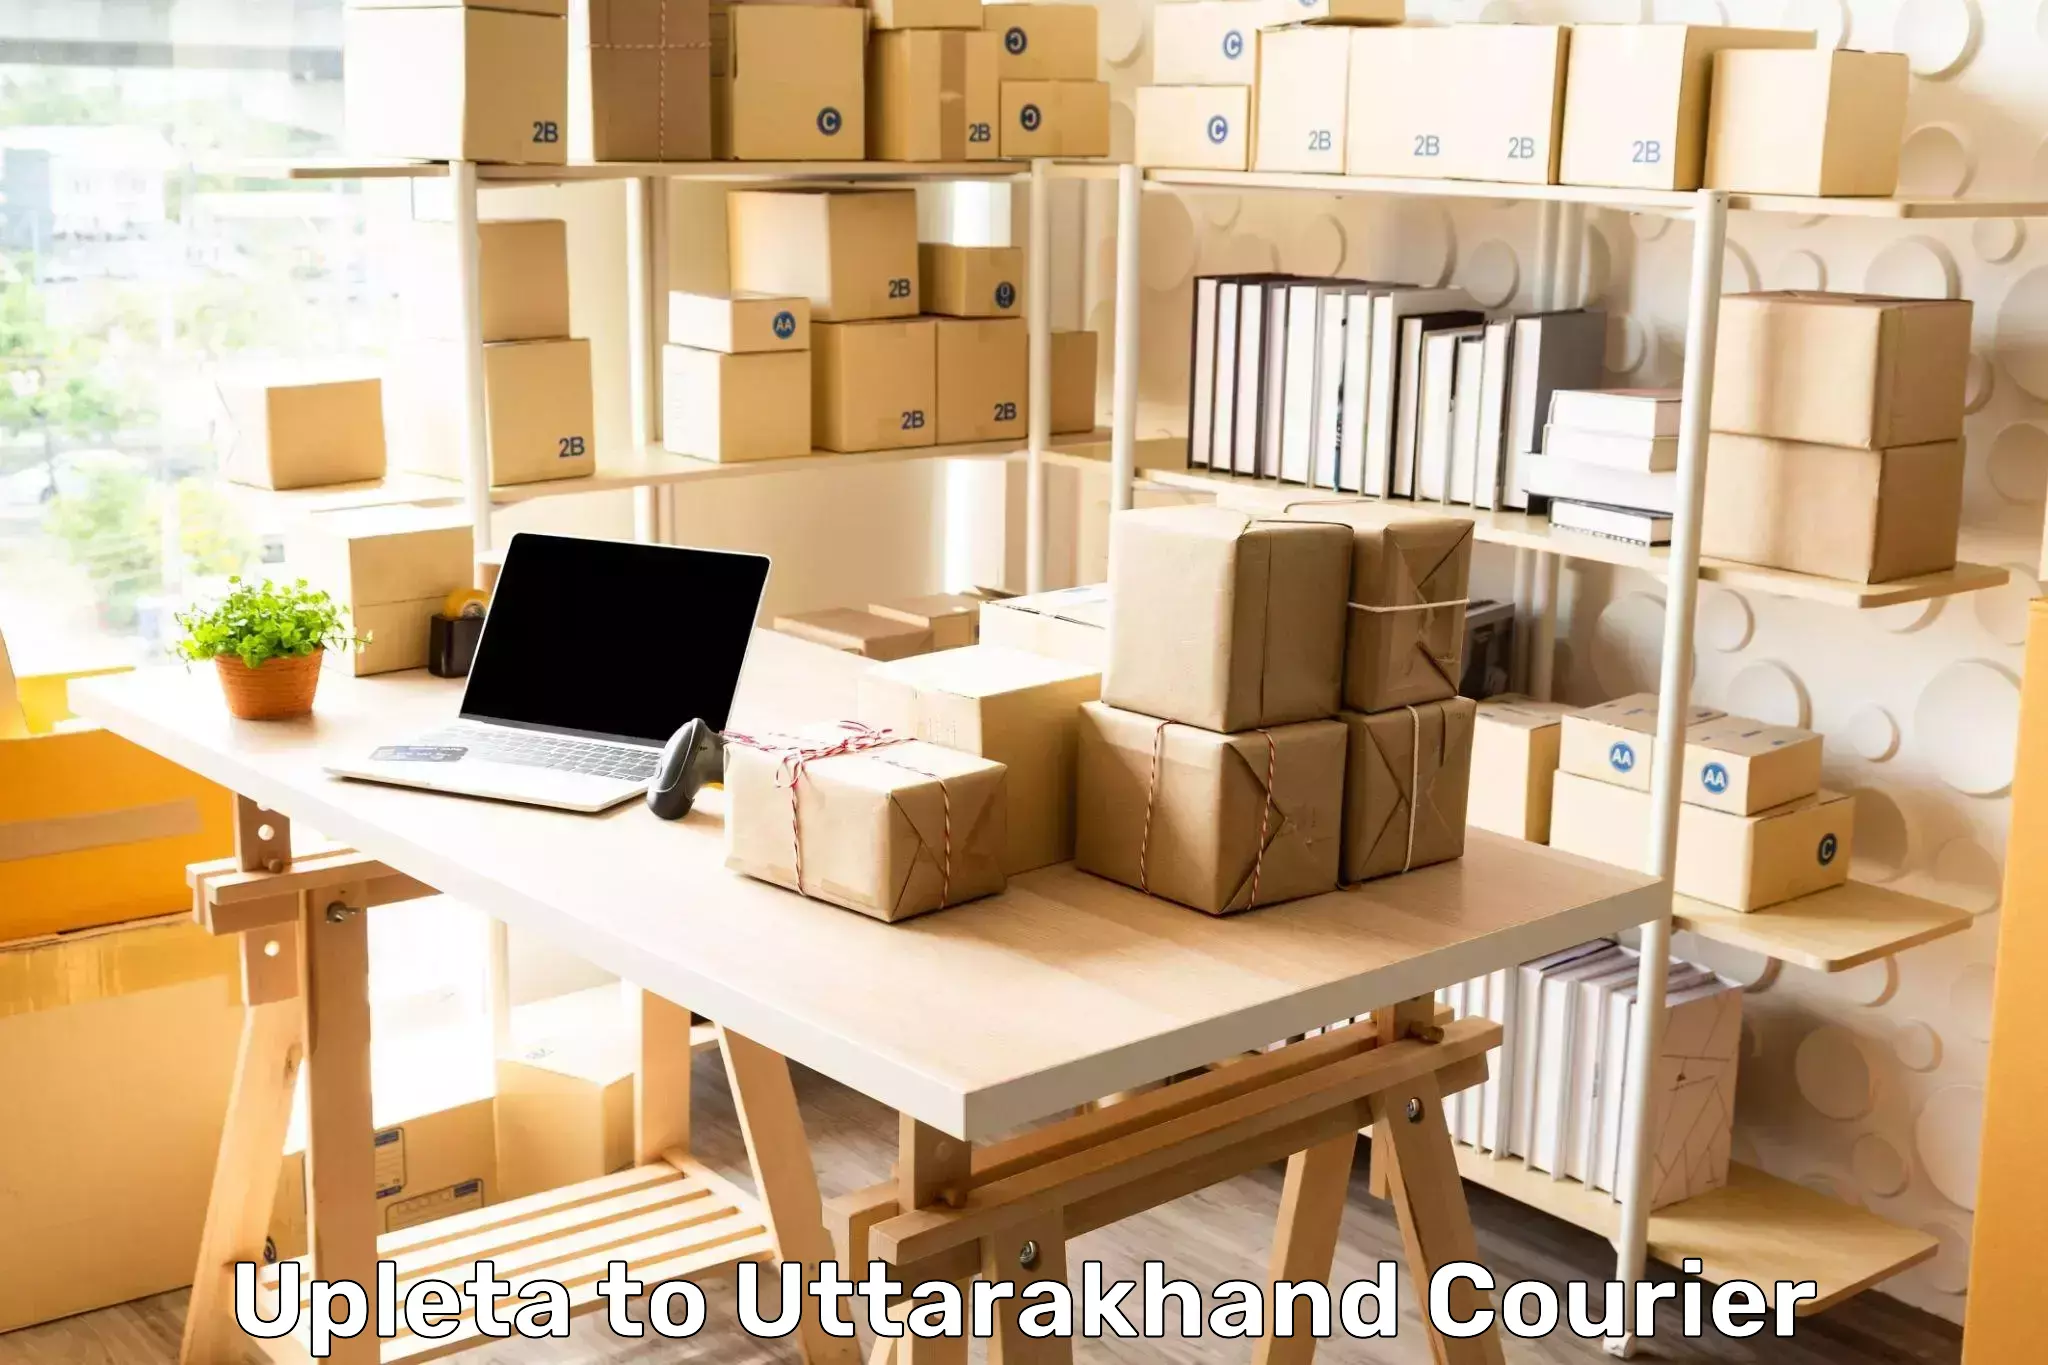 Punctual parcel services Upleta to Uttarakhand